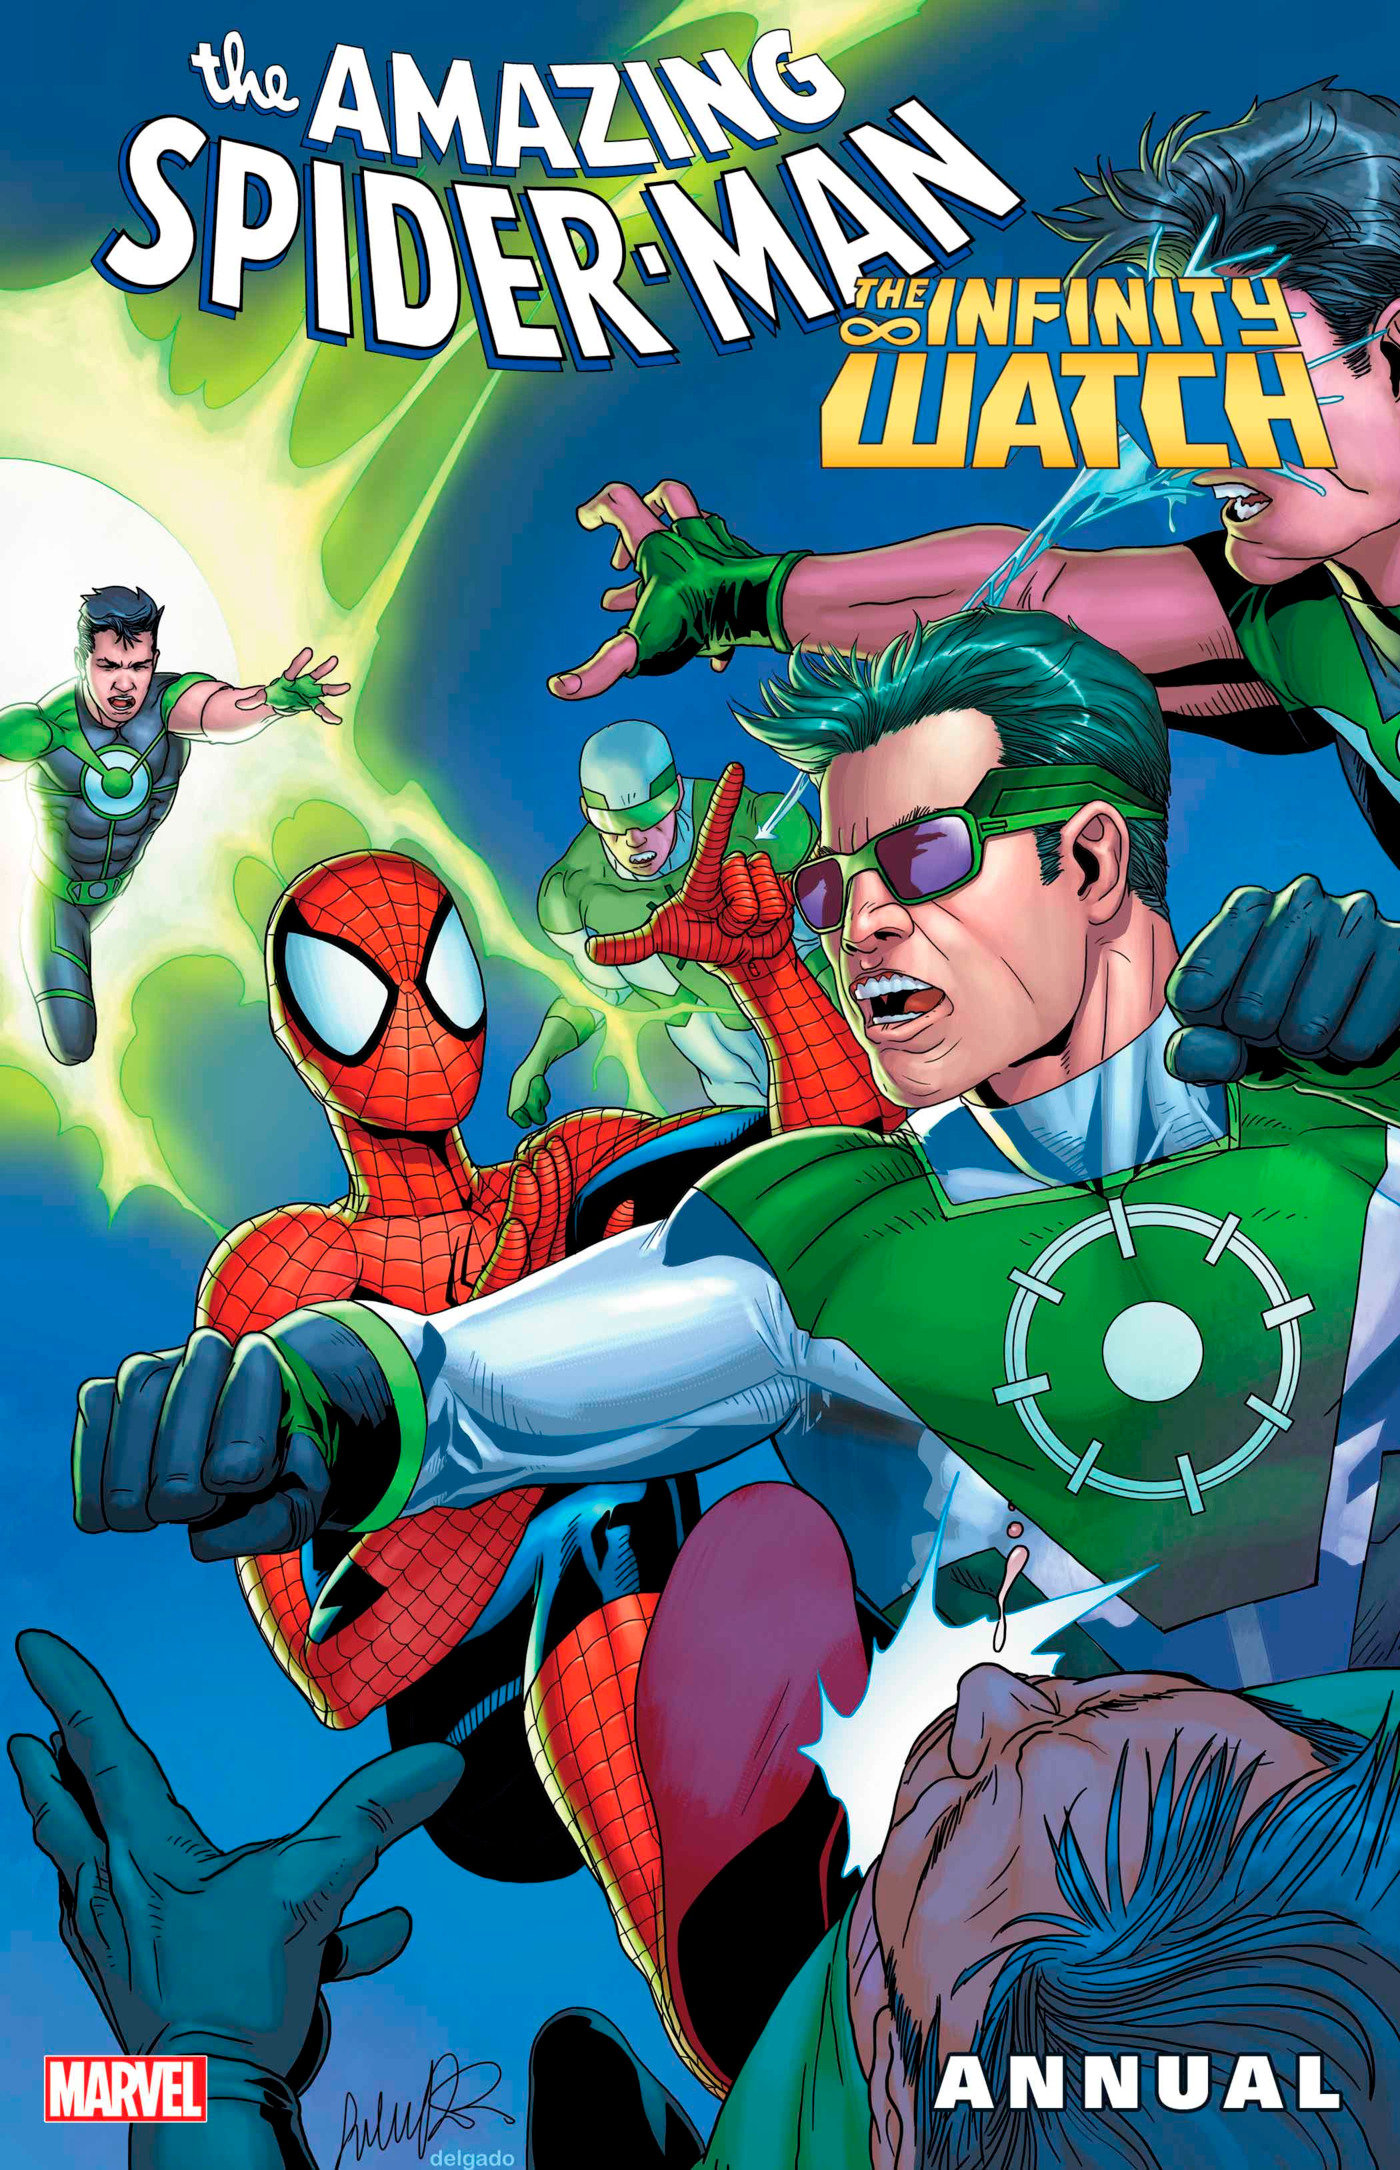 Amazing Spider-Man Annual #1 (Infinity Watch)